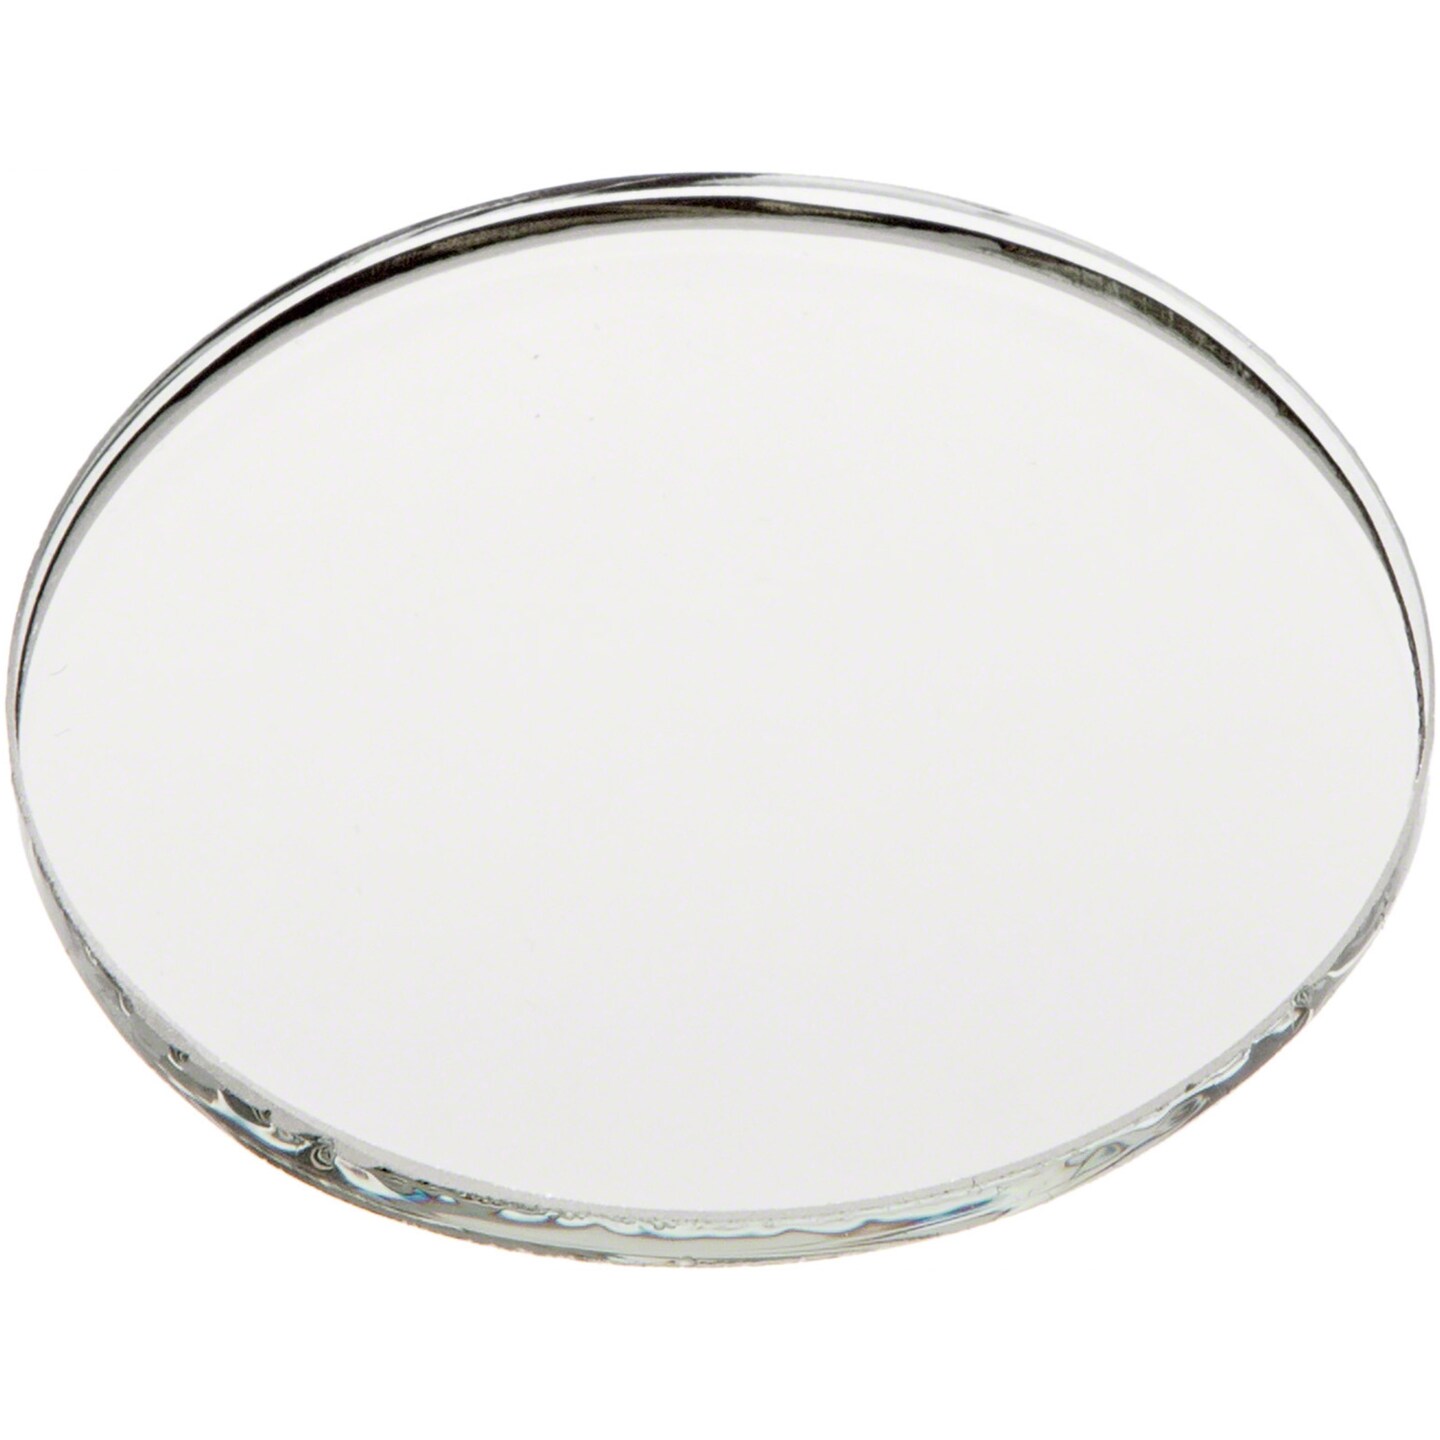 Plymor Round 3mm Non-Beveled Glass Mirror, 2 inch x 2 inch